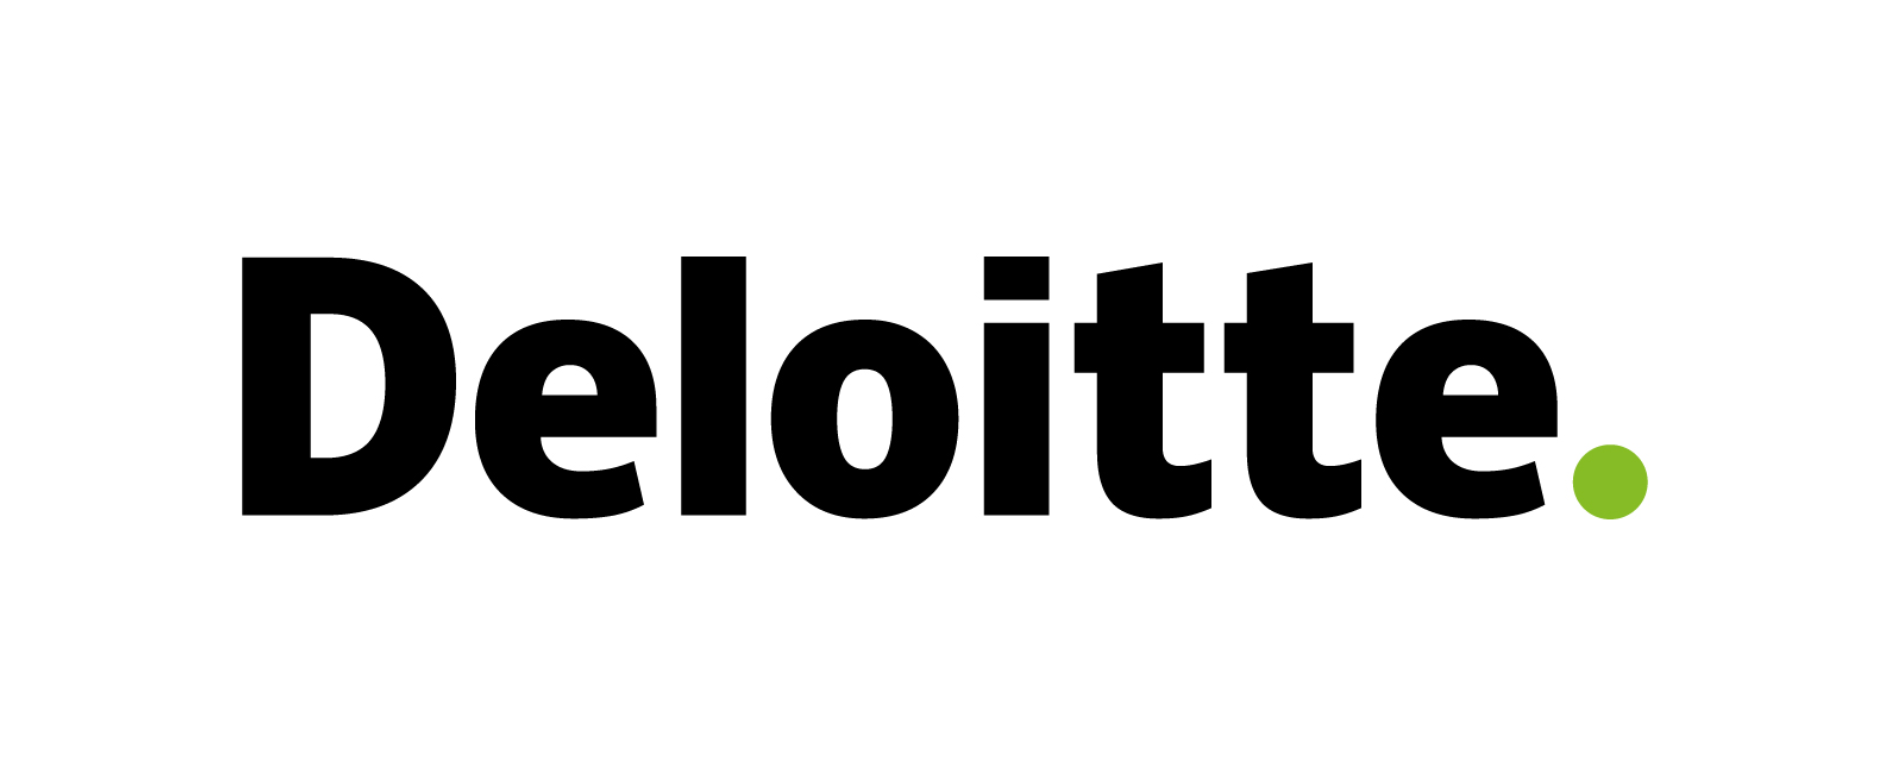 Correct Deloitte logo.png